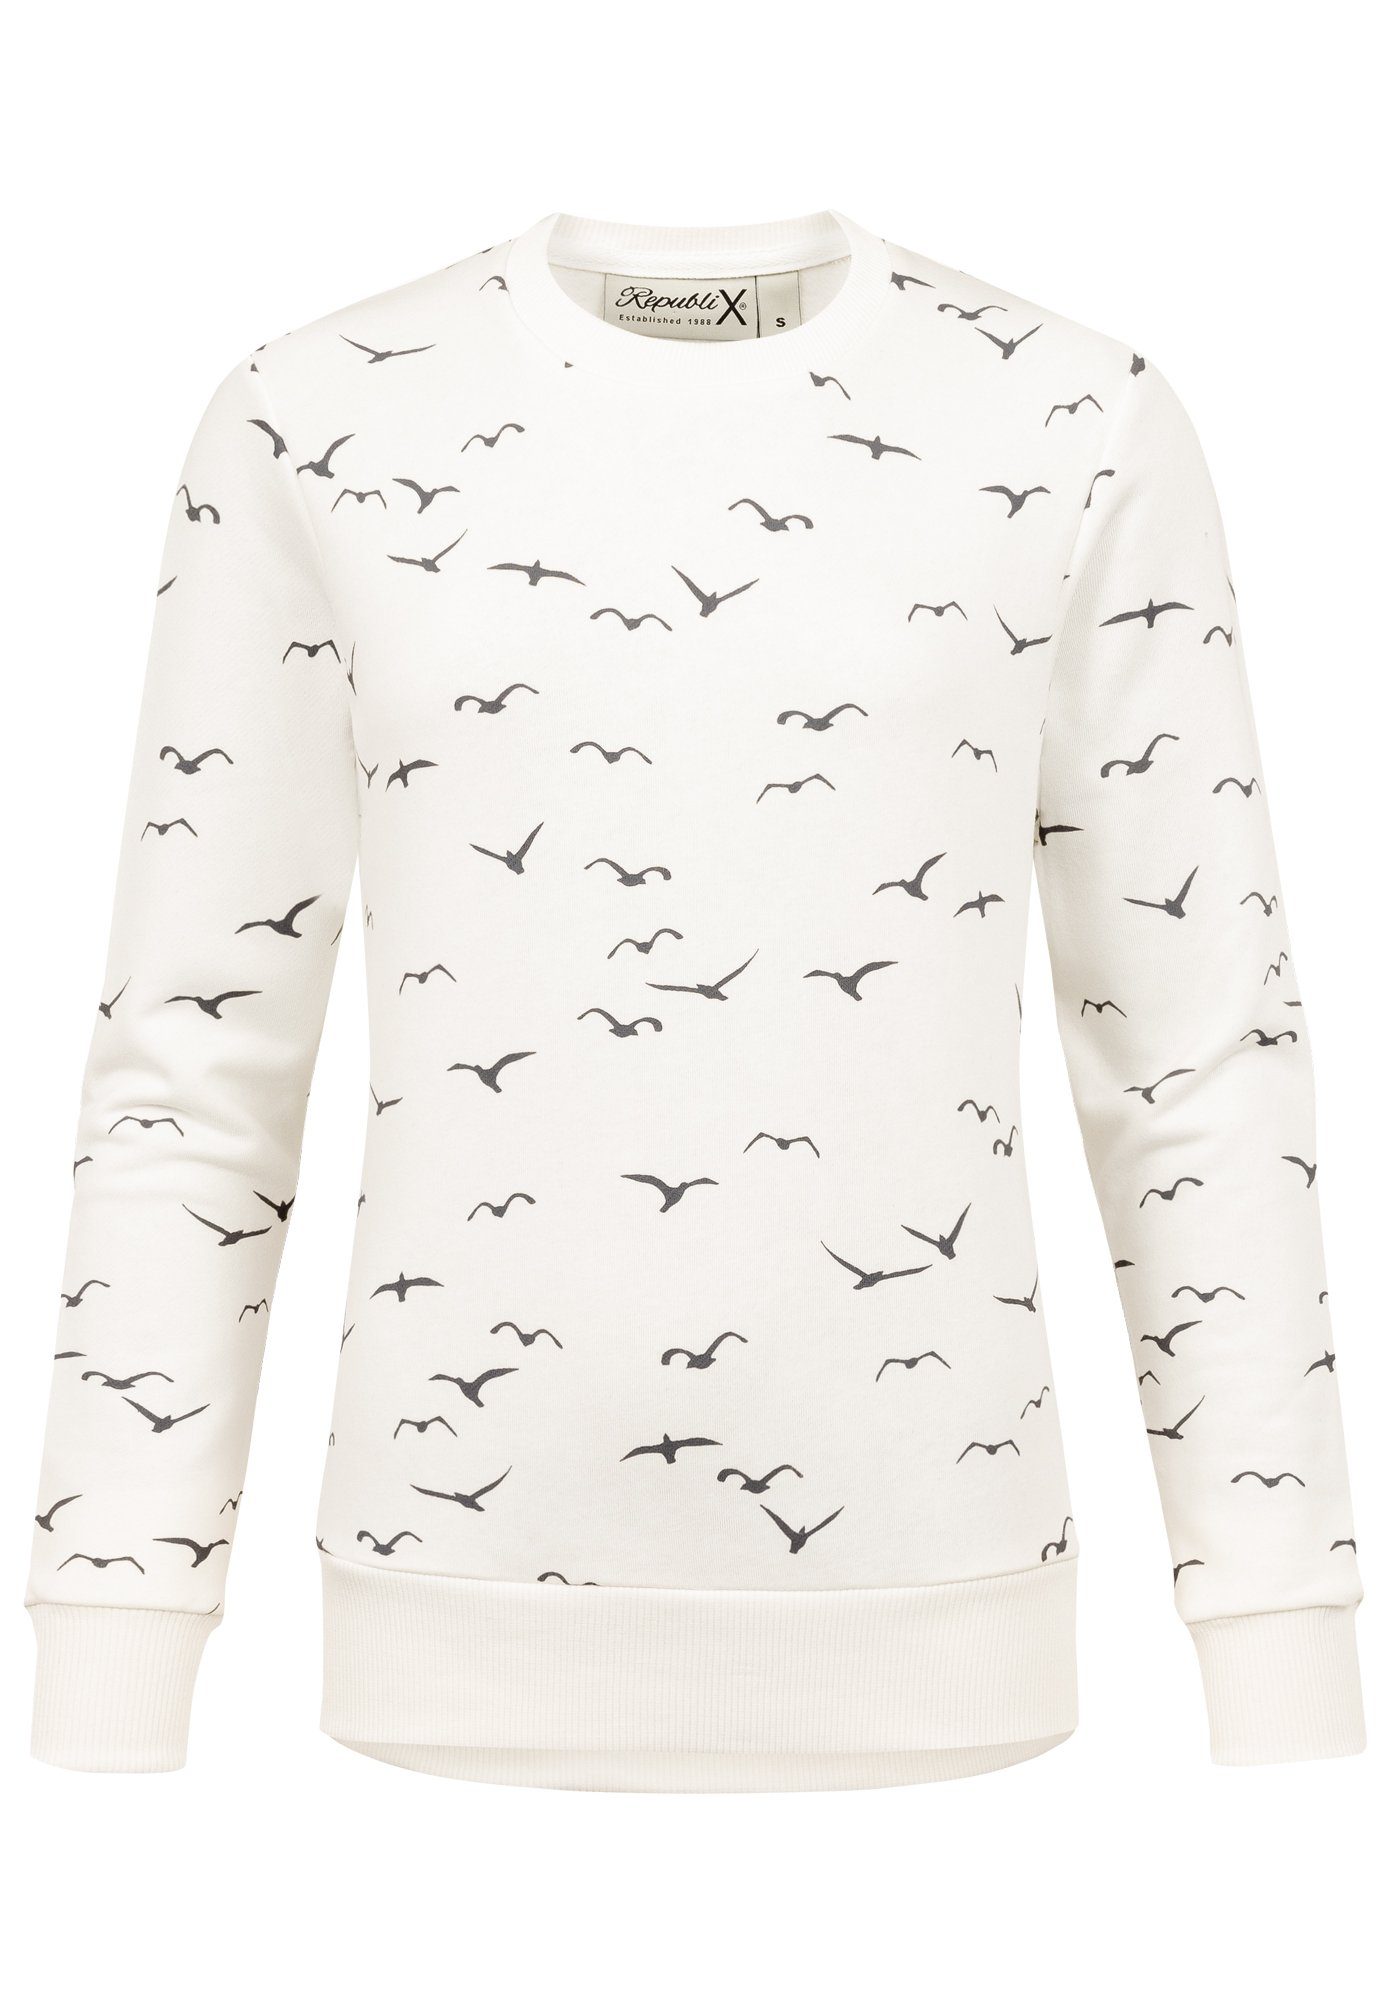 Damen ANA Weiß Hoodie Kapuzenpullover REPUBLIX Sweatshirt Print Pullover Sweatjacke